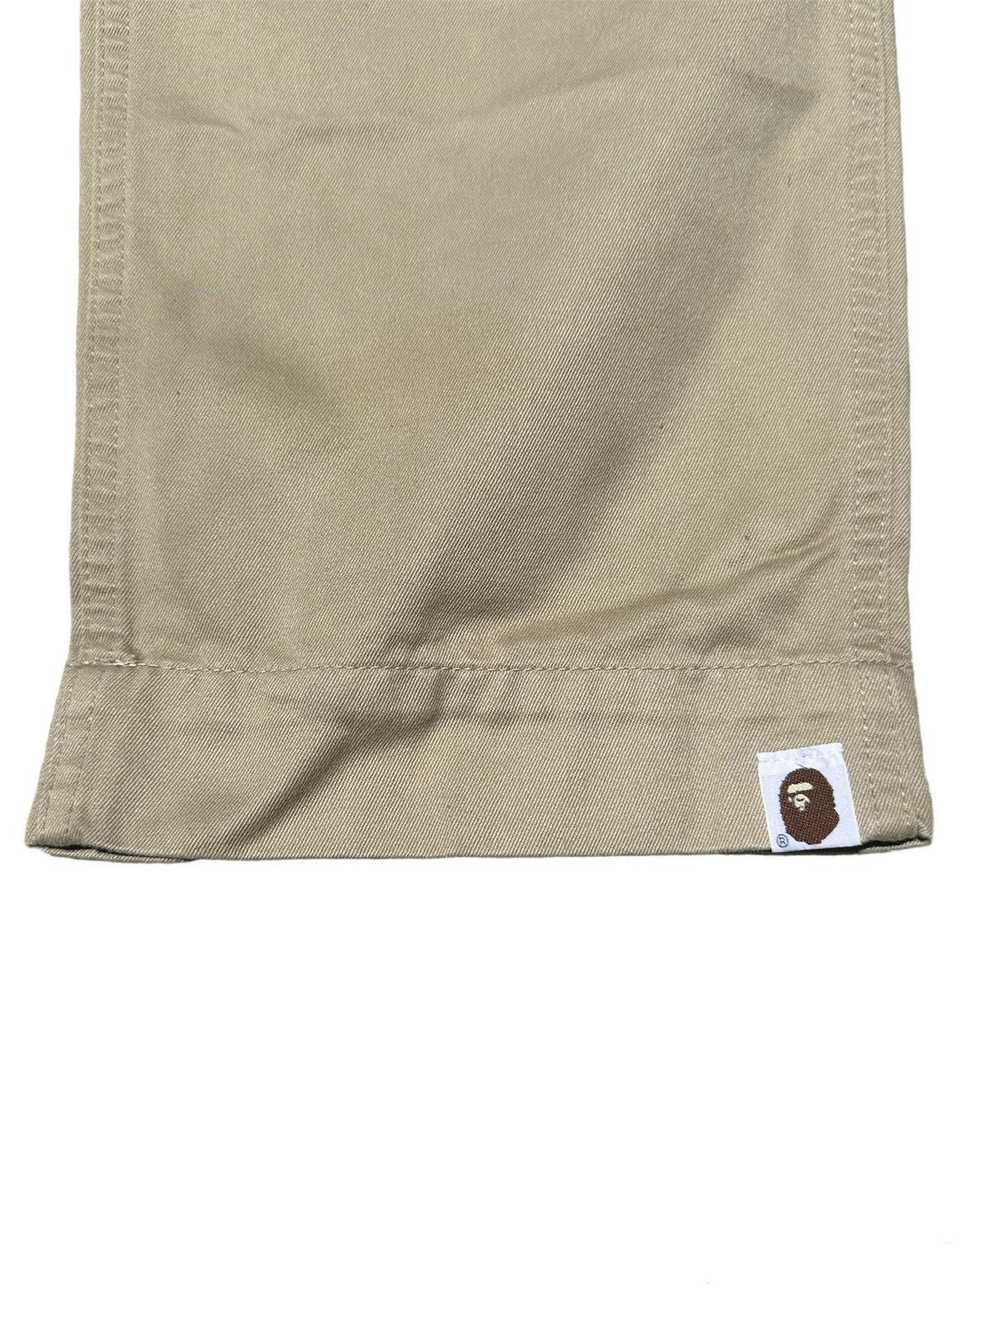 Bape × Nigo Bape Star Embroidery Spell Out Pants - image 7